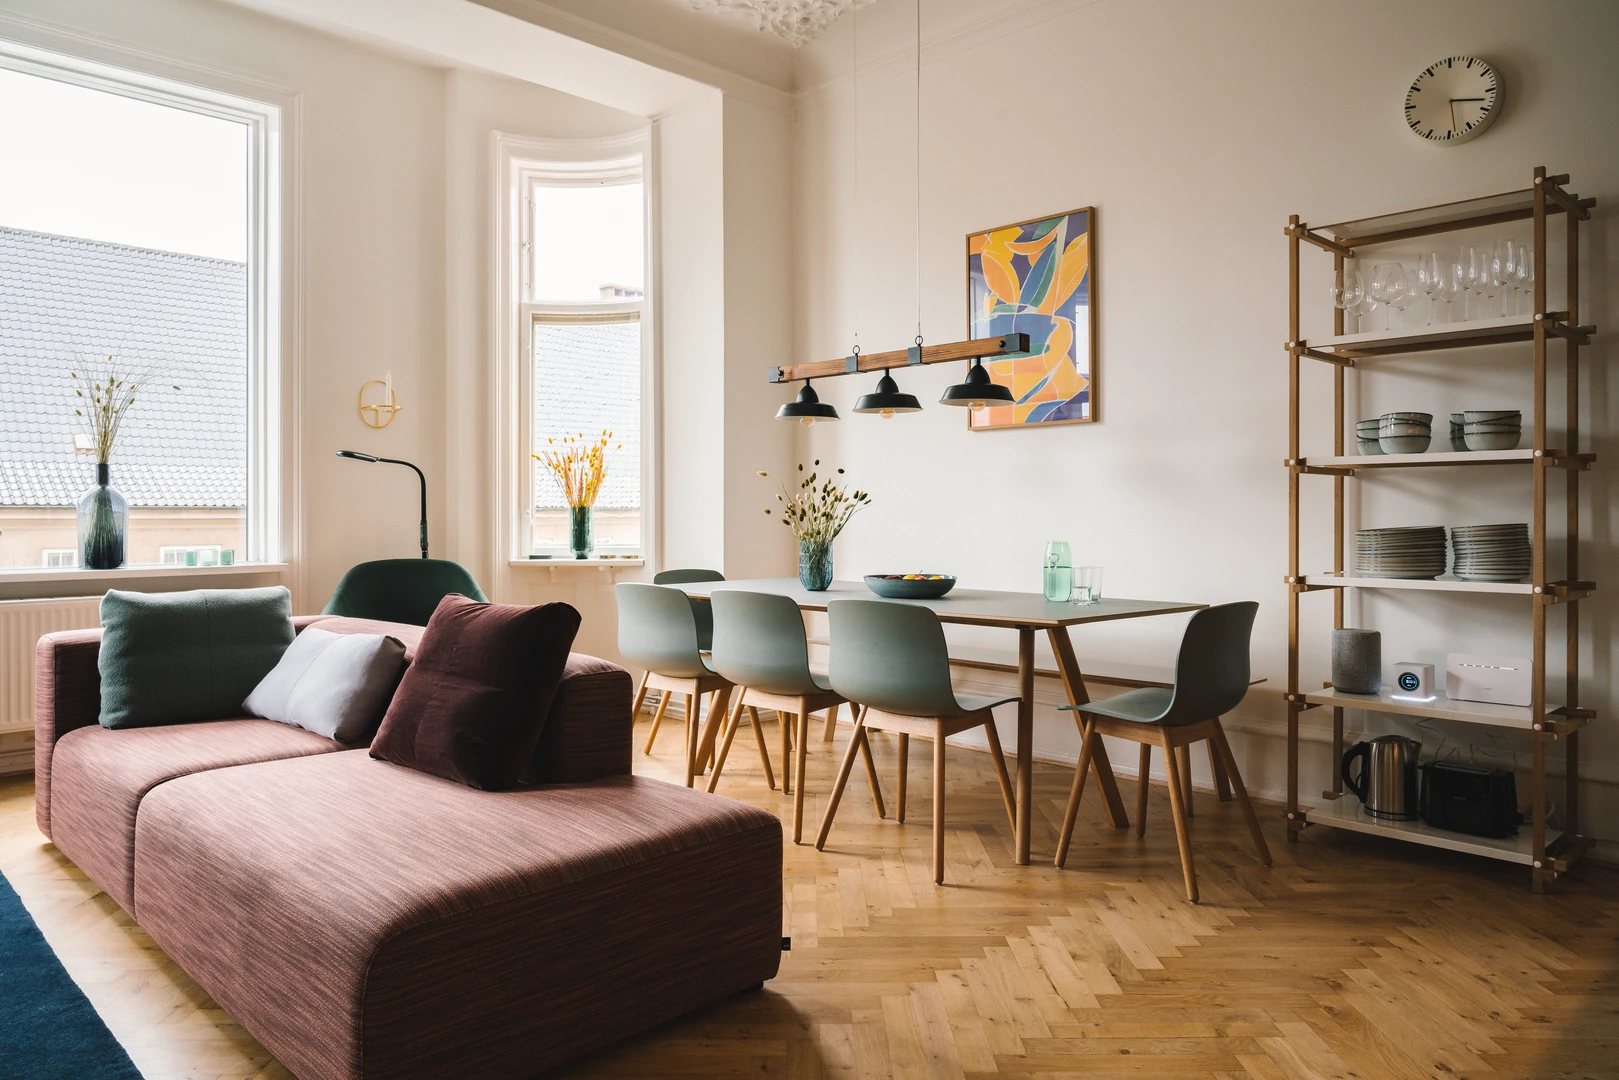 København de ucuz özel oda